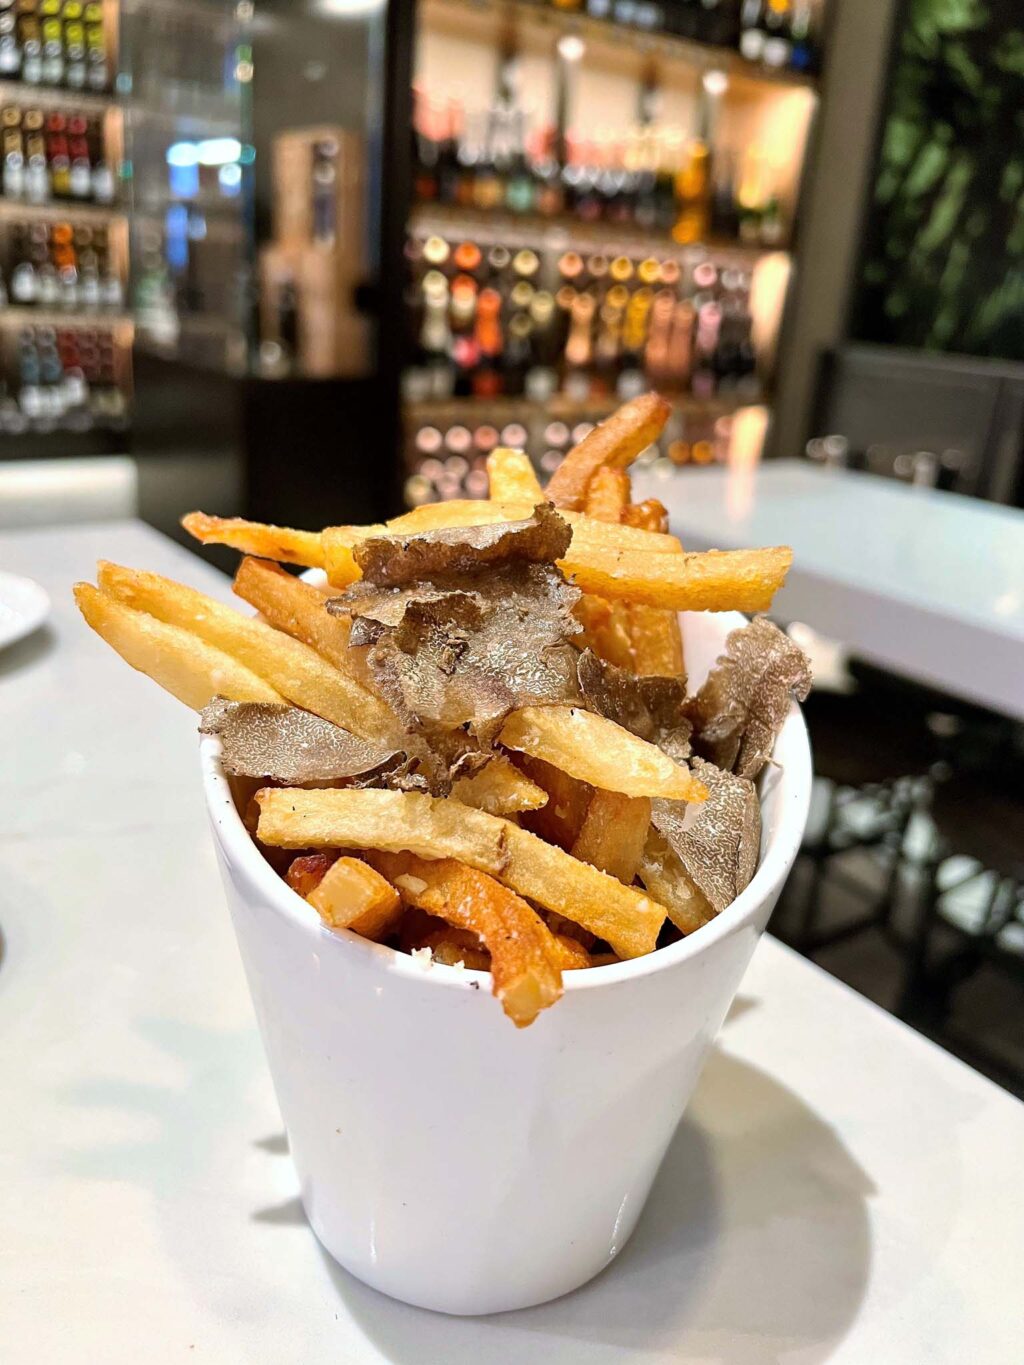 Truffle Fries | Wally's Las Vegas, Resorts World Las Vegas, NV